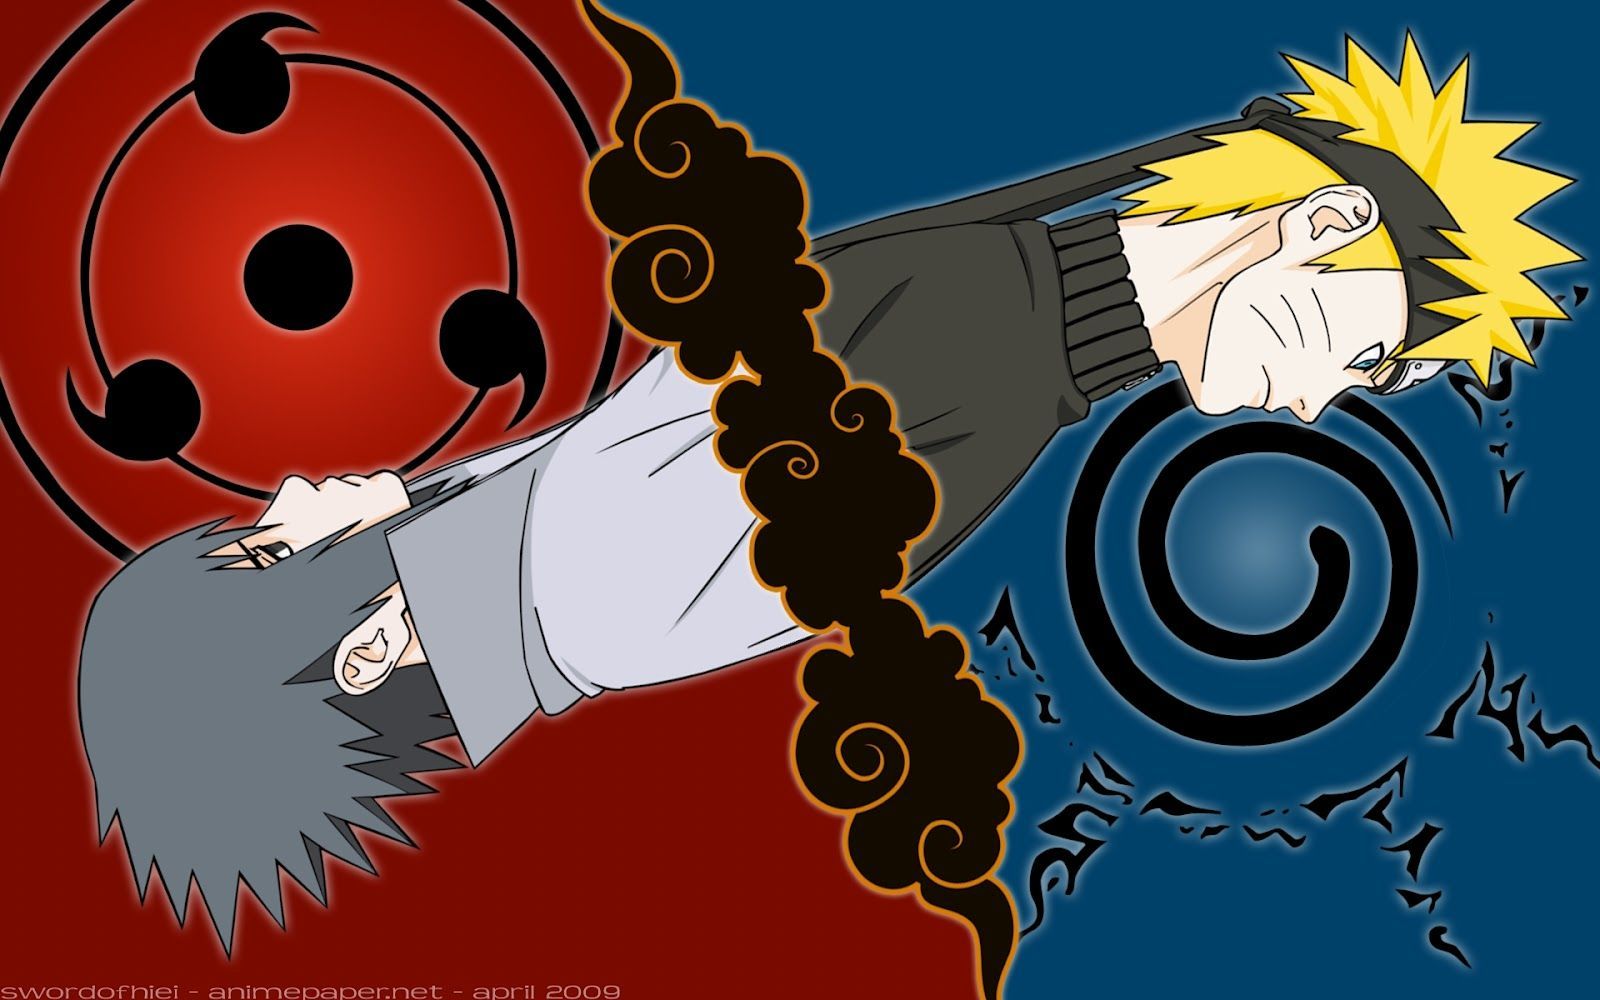 Naruto and Sasuke Wallpaper Image for Lumia - Cartoons Wallpapers